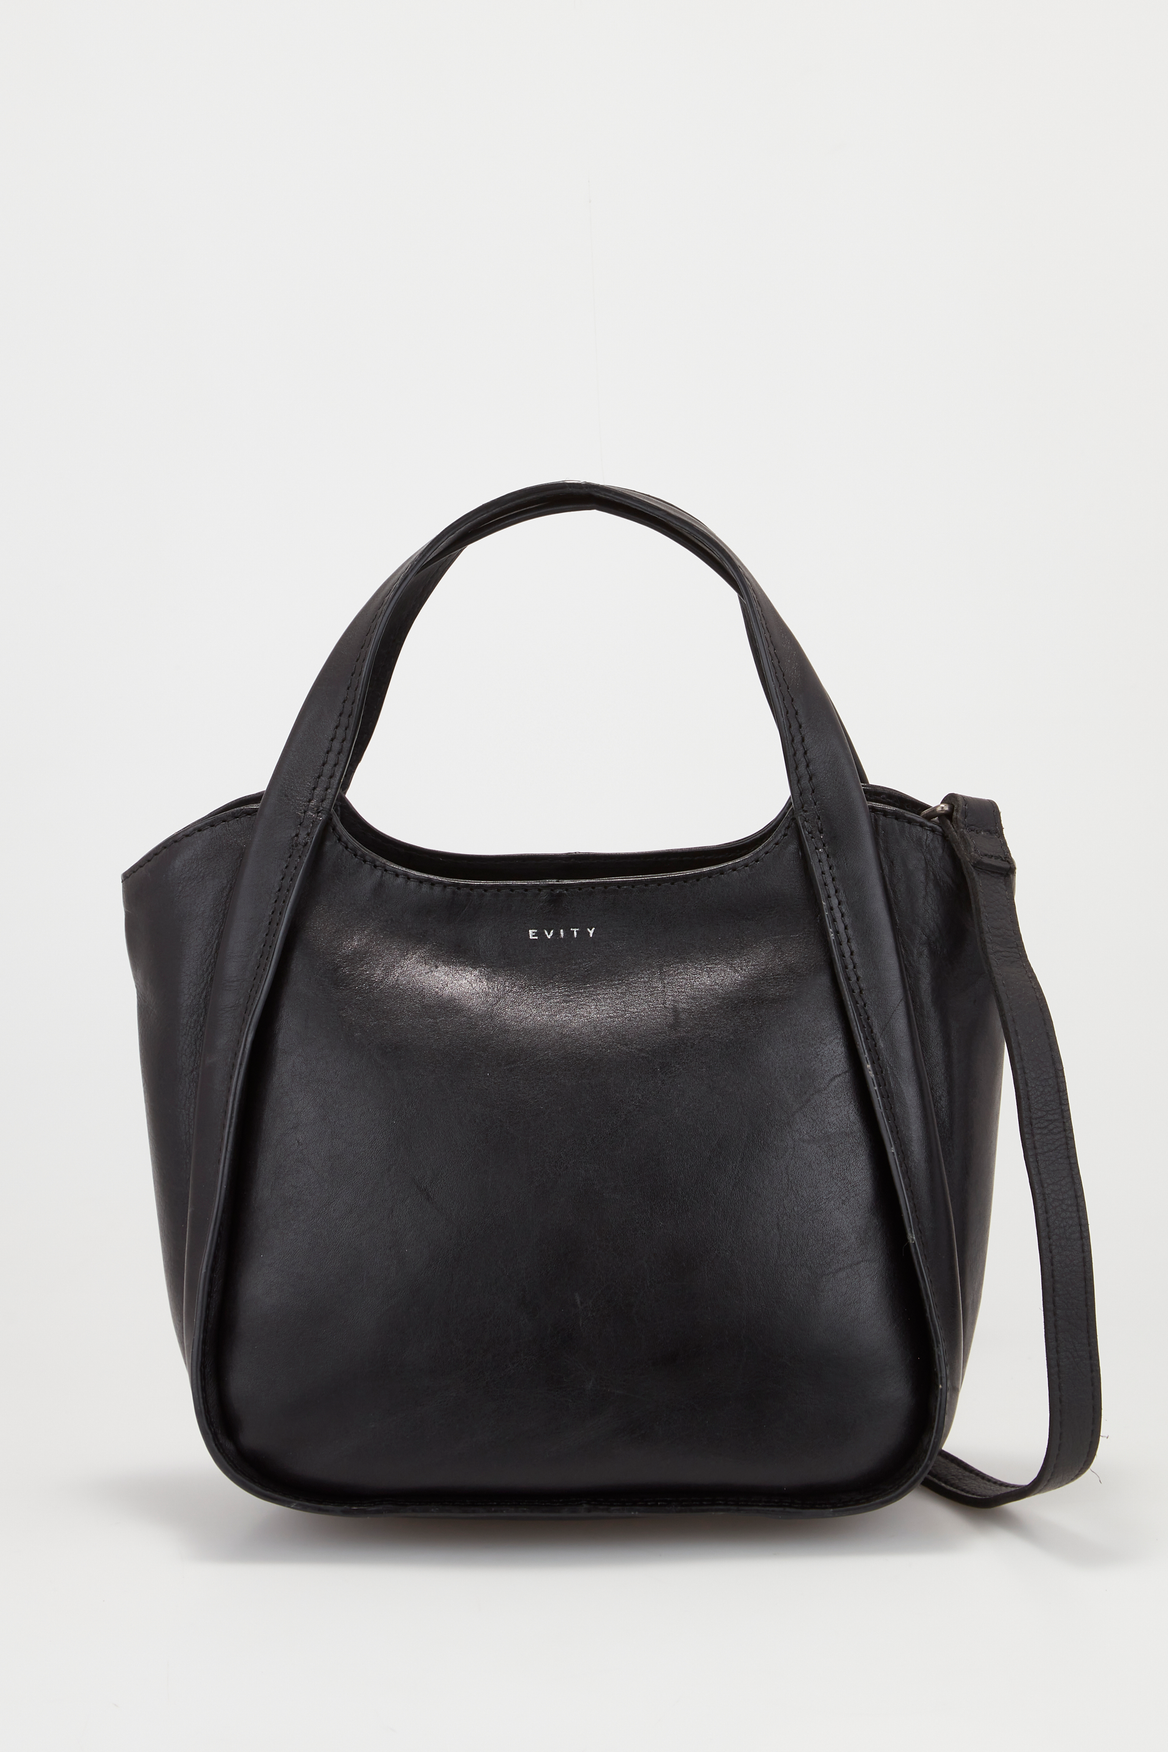 Evity Maya Leather Mini Shopper Bag – Strandbags Australia